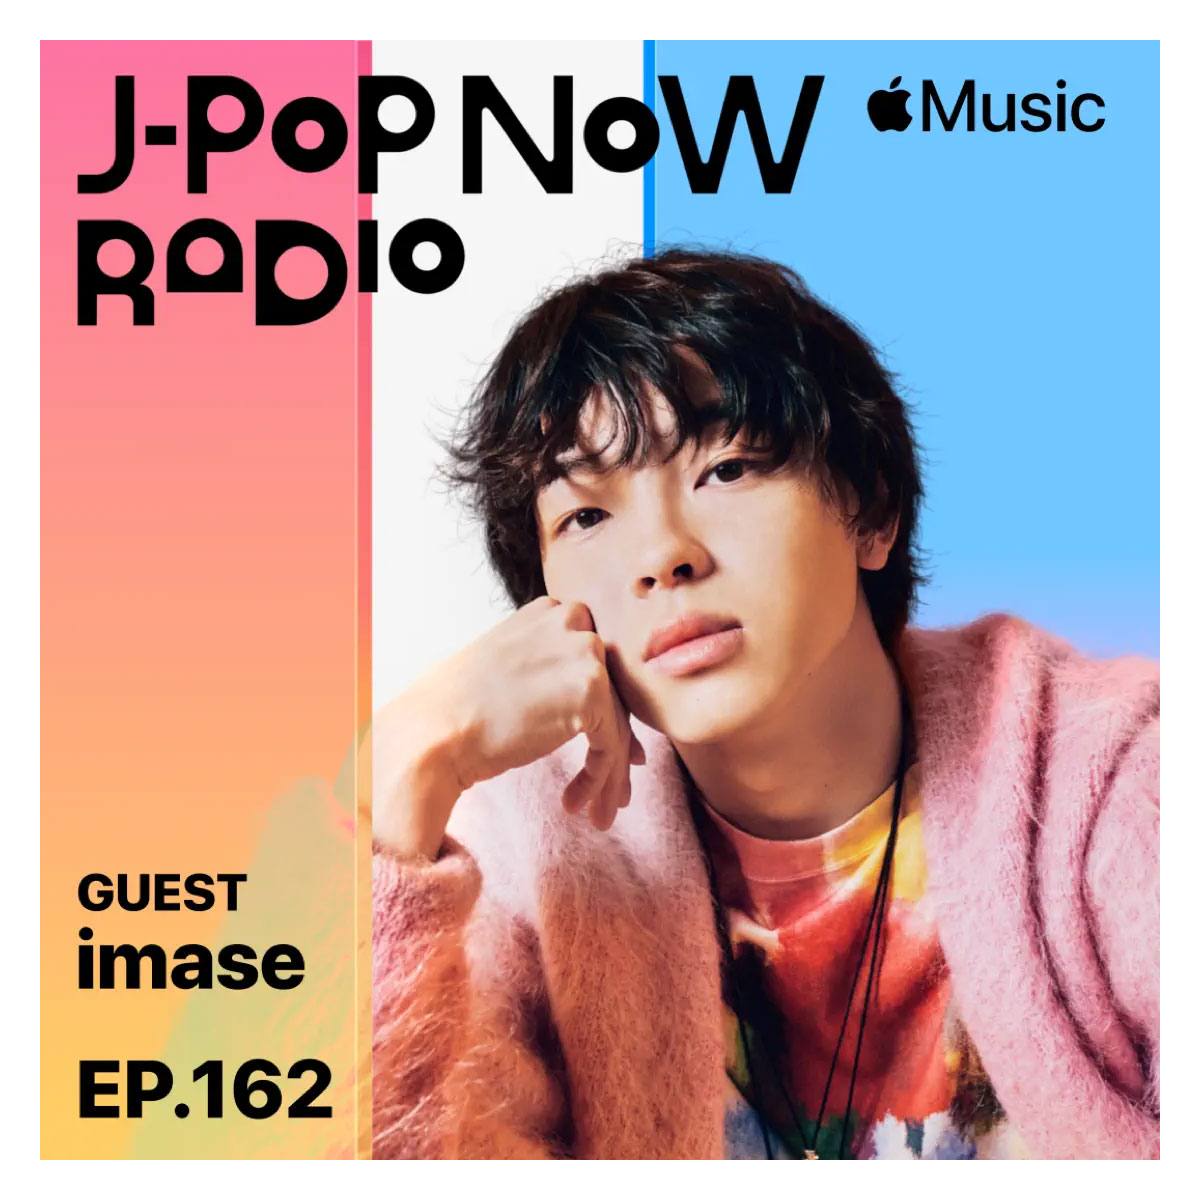 J-Pop Now Radio with Kentaro Ochiai ゲスト：imase